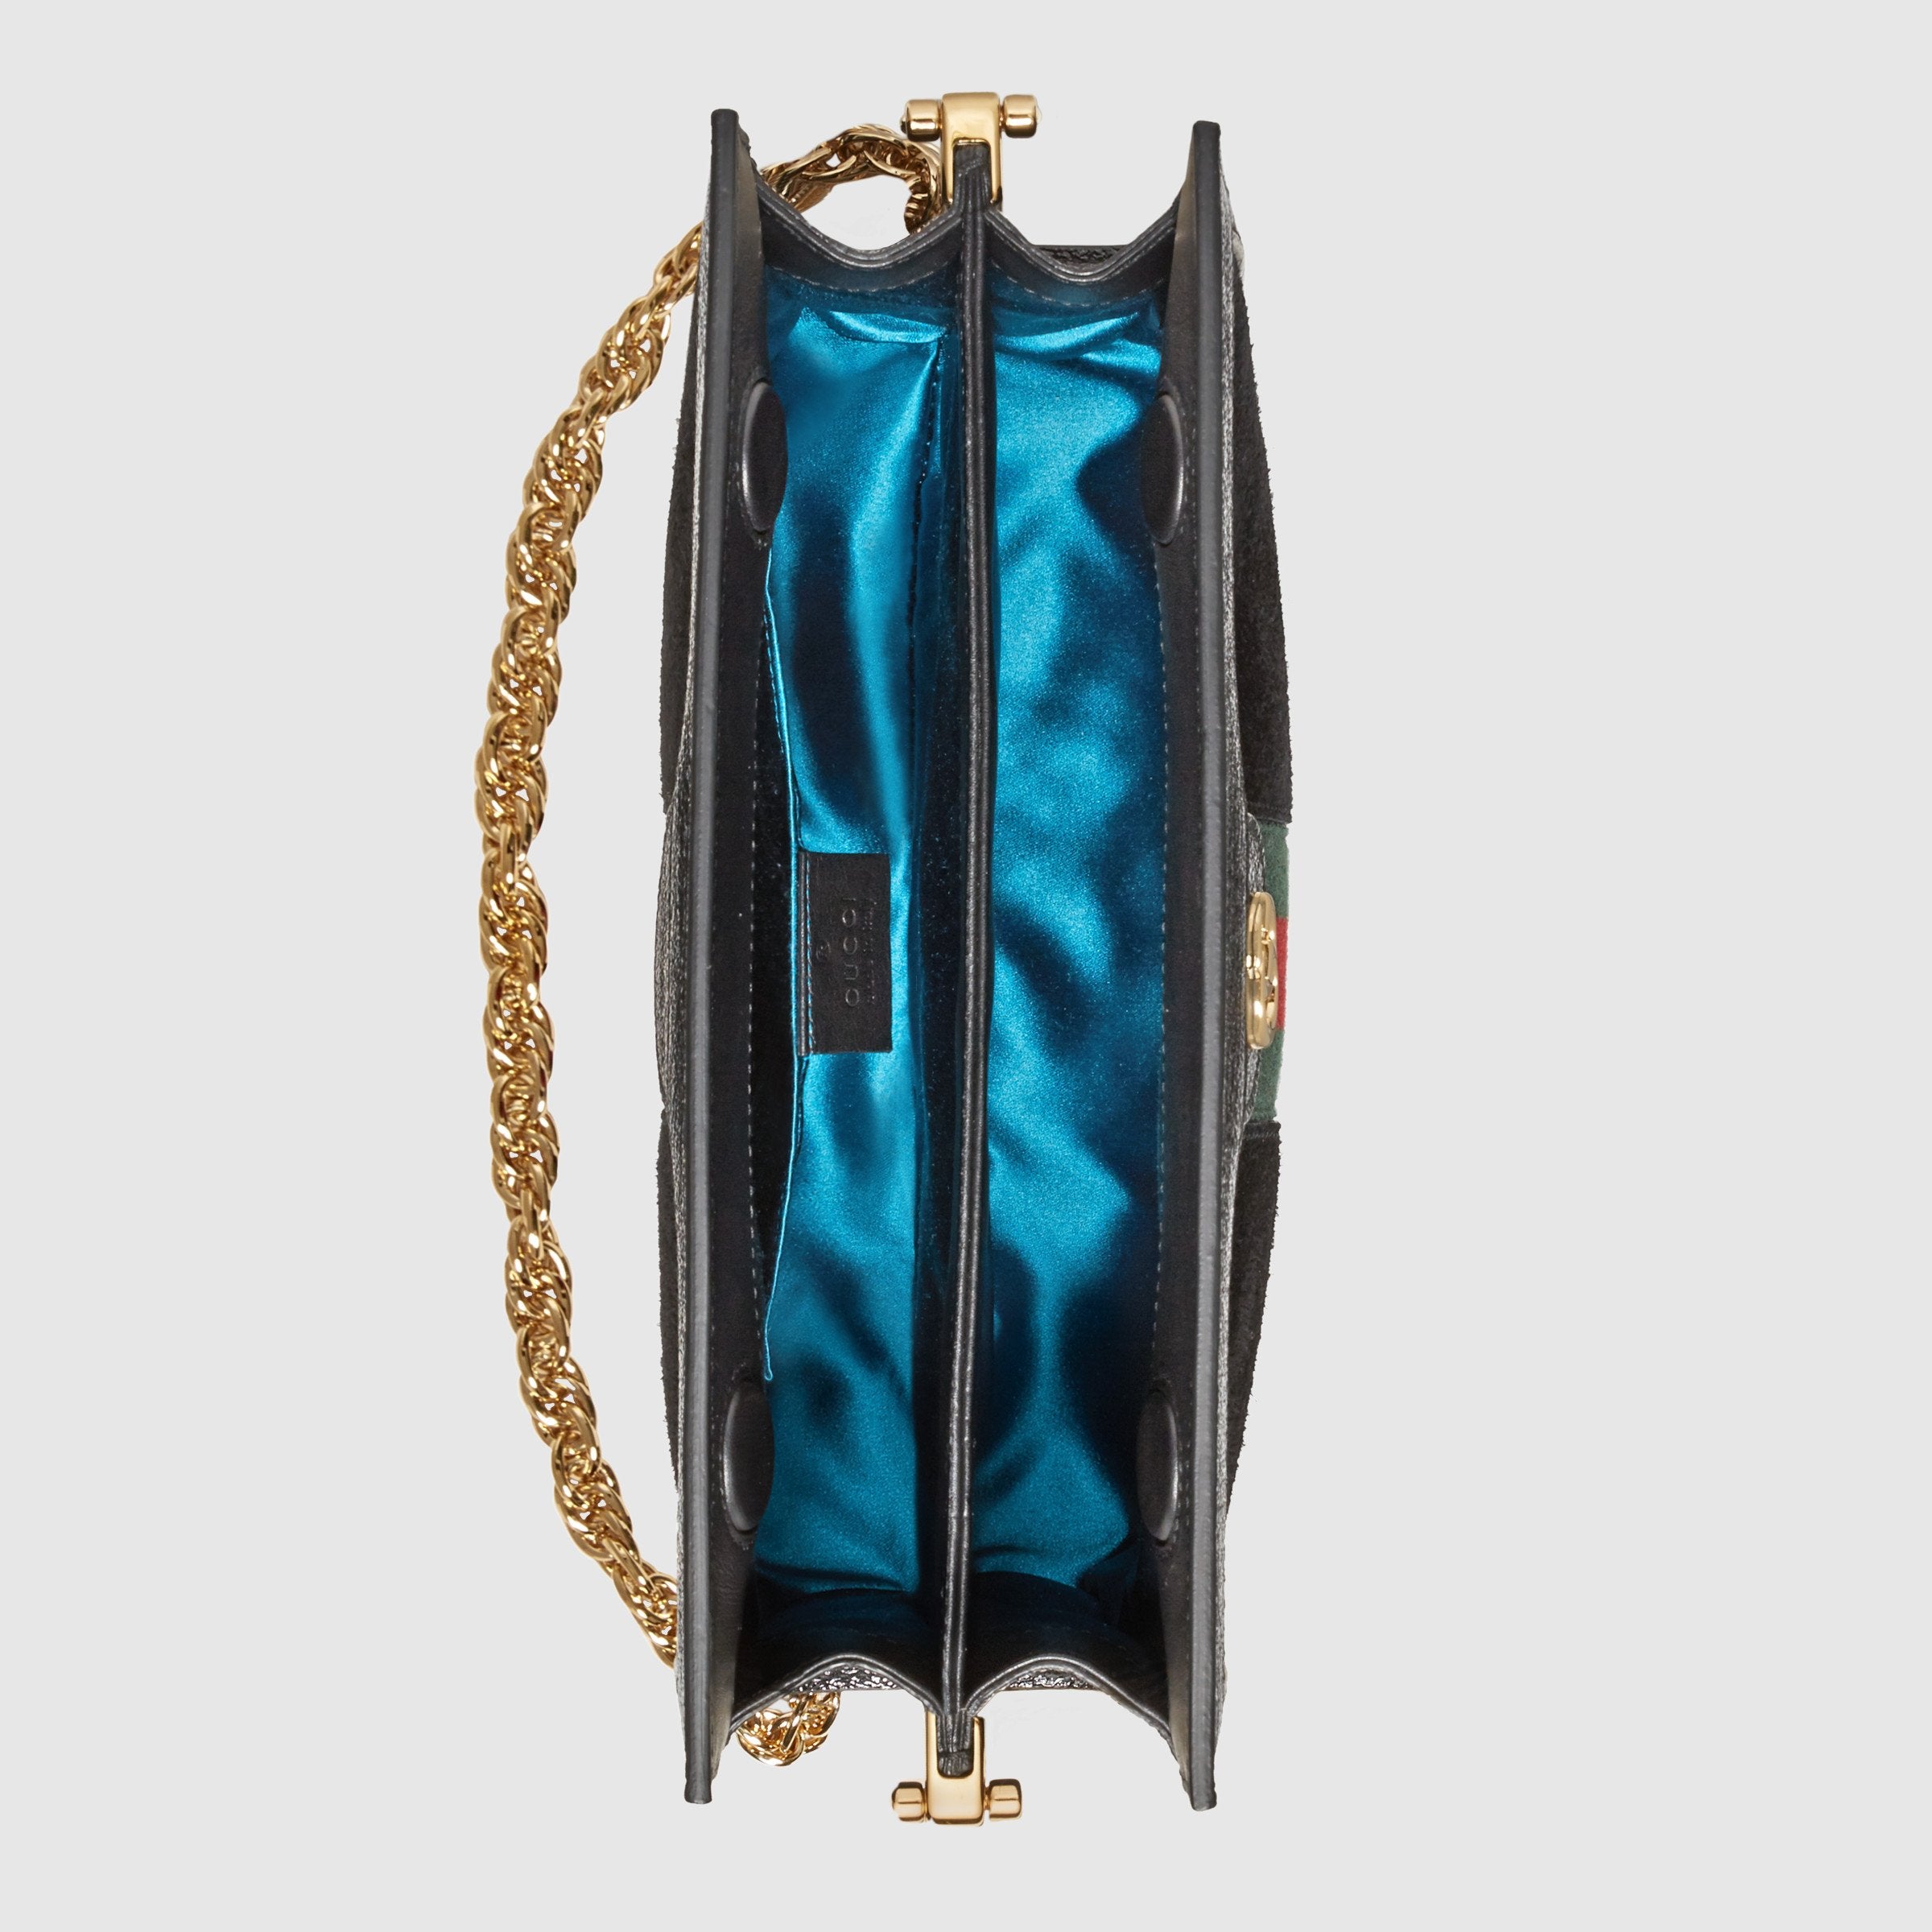 Gucci Ophidia Suede Small Shoulder Bag Black